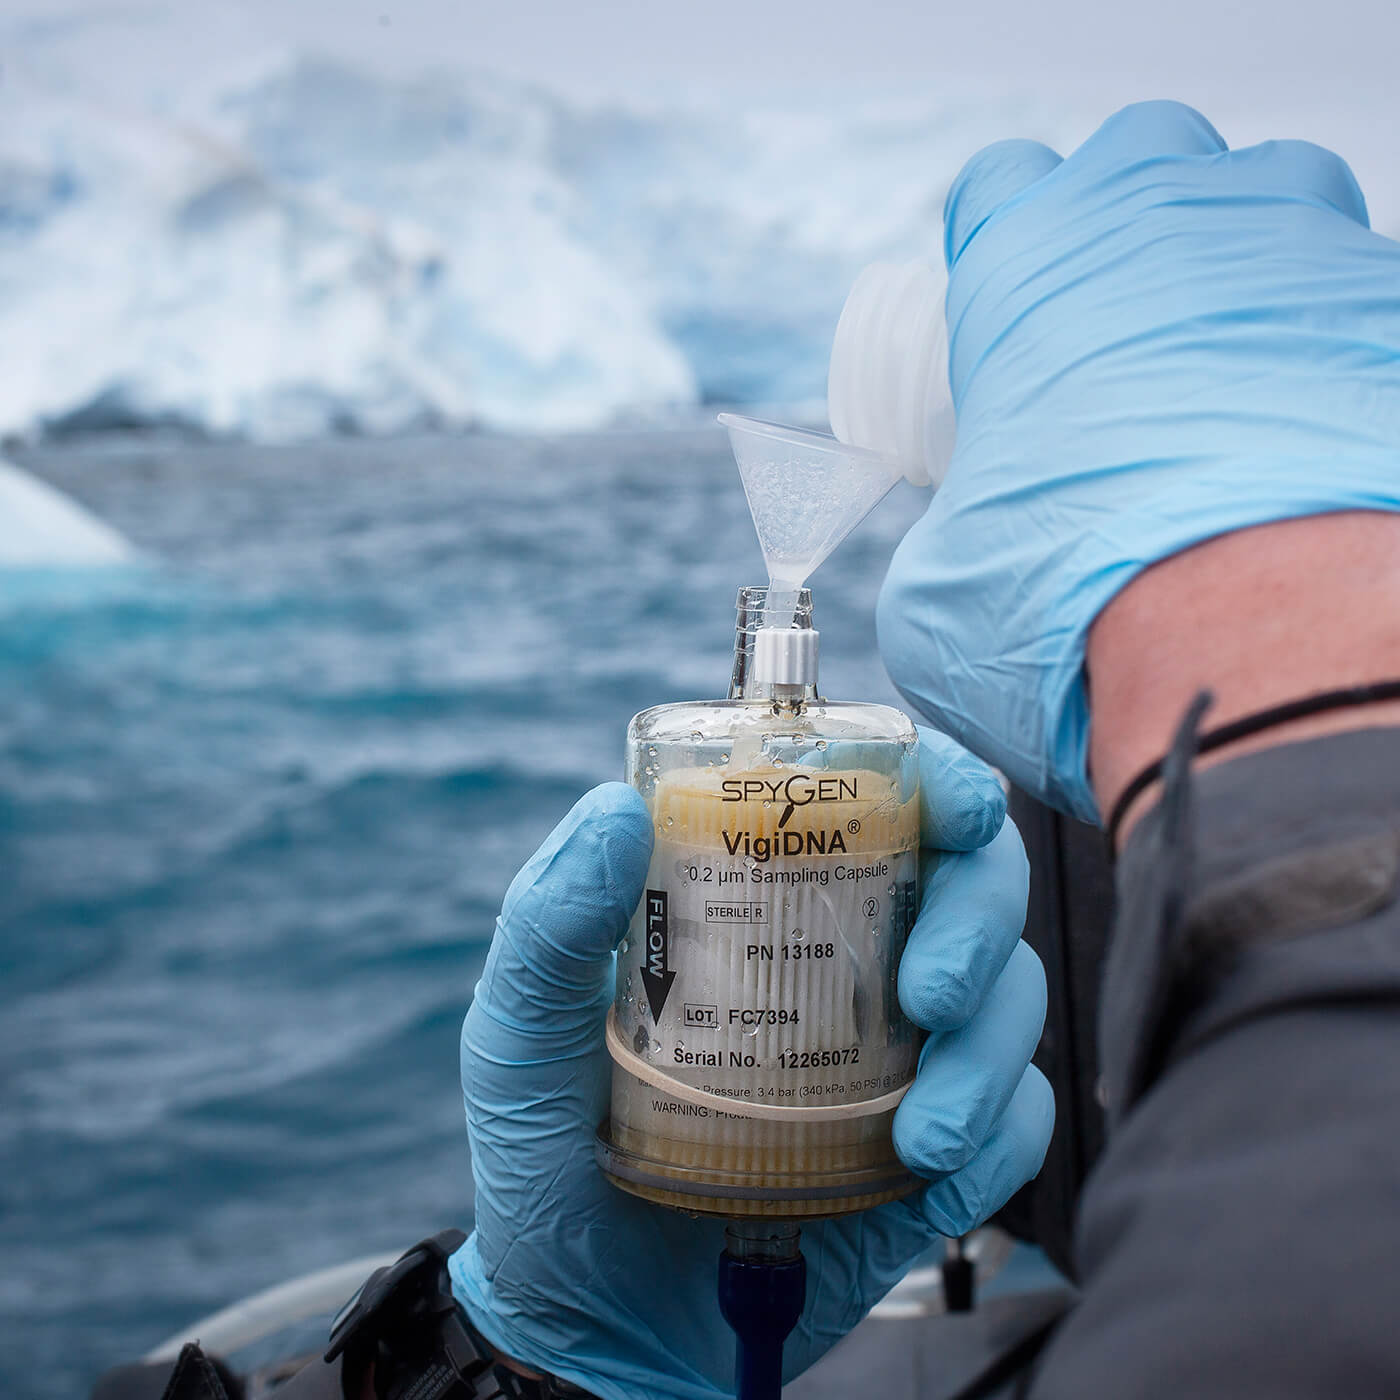 Scientist Nacim Guellati taking a eDNA sample in Antarctica.